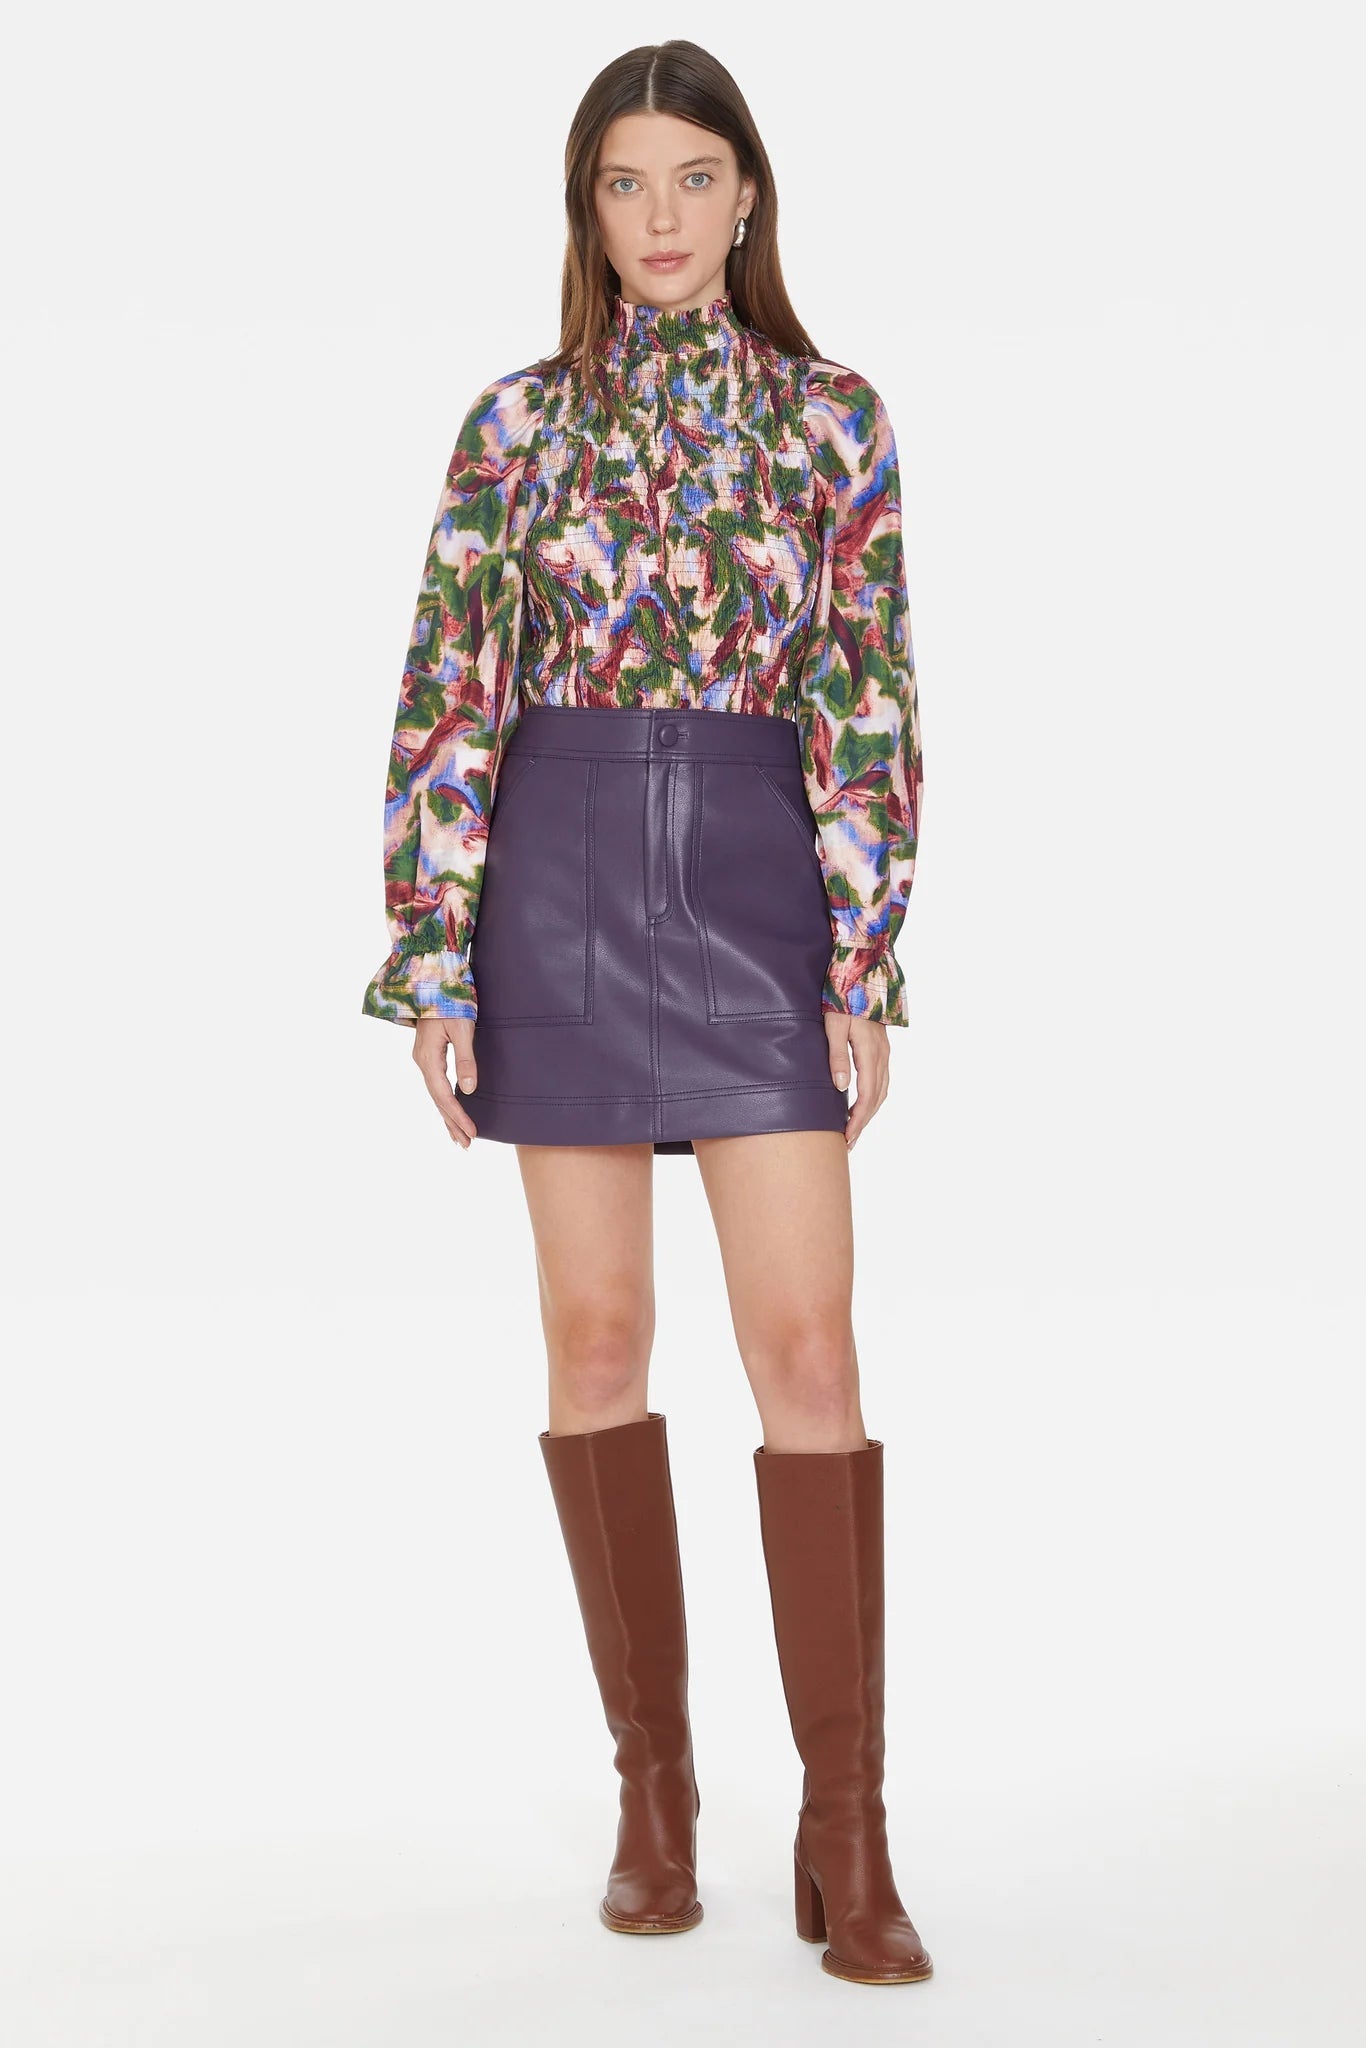 Marie Oliver Braden Skirt in Plum - Estilo Boutique